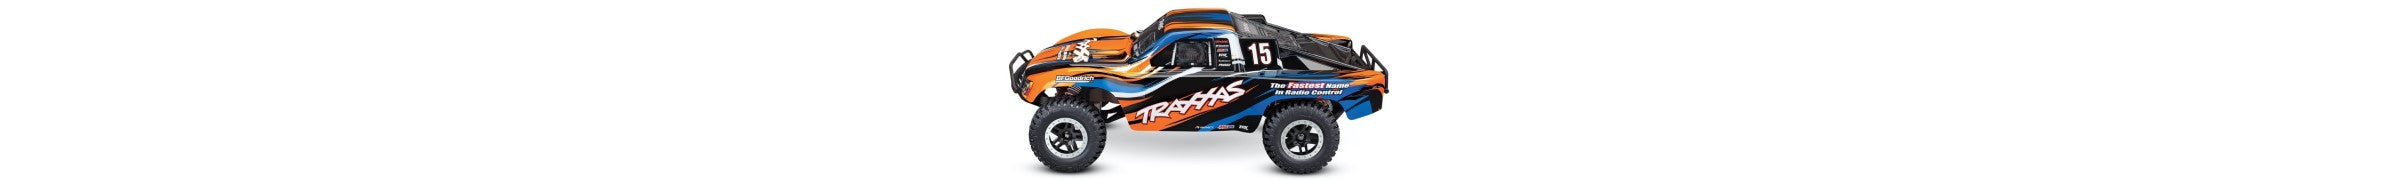 Parts For 58034-1 Traxxas Slash 2WD 1/10 Short Course Truck